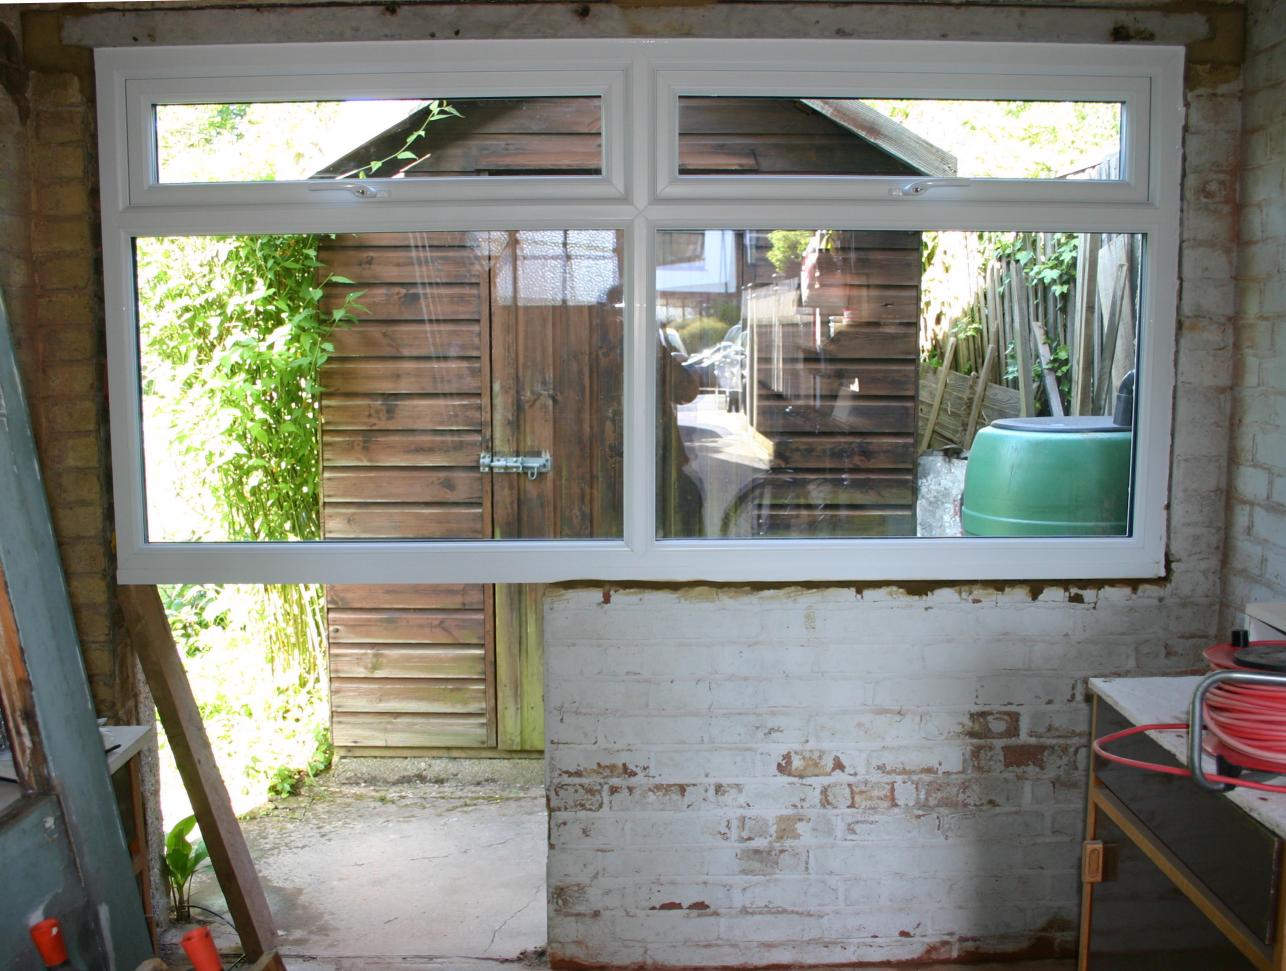 View of New Window Inside Garage.